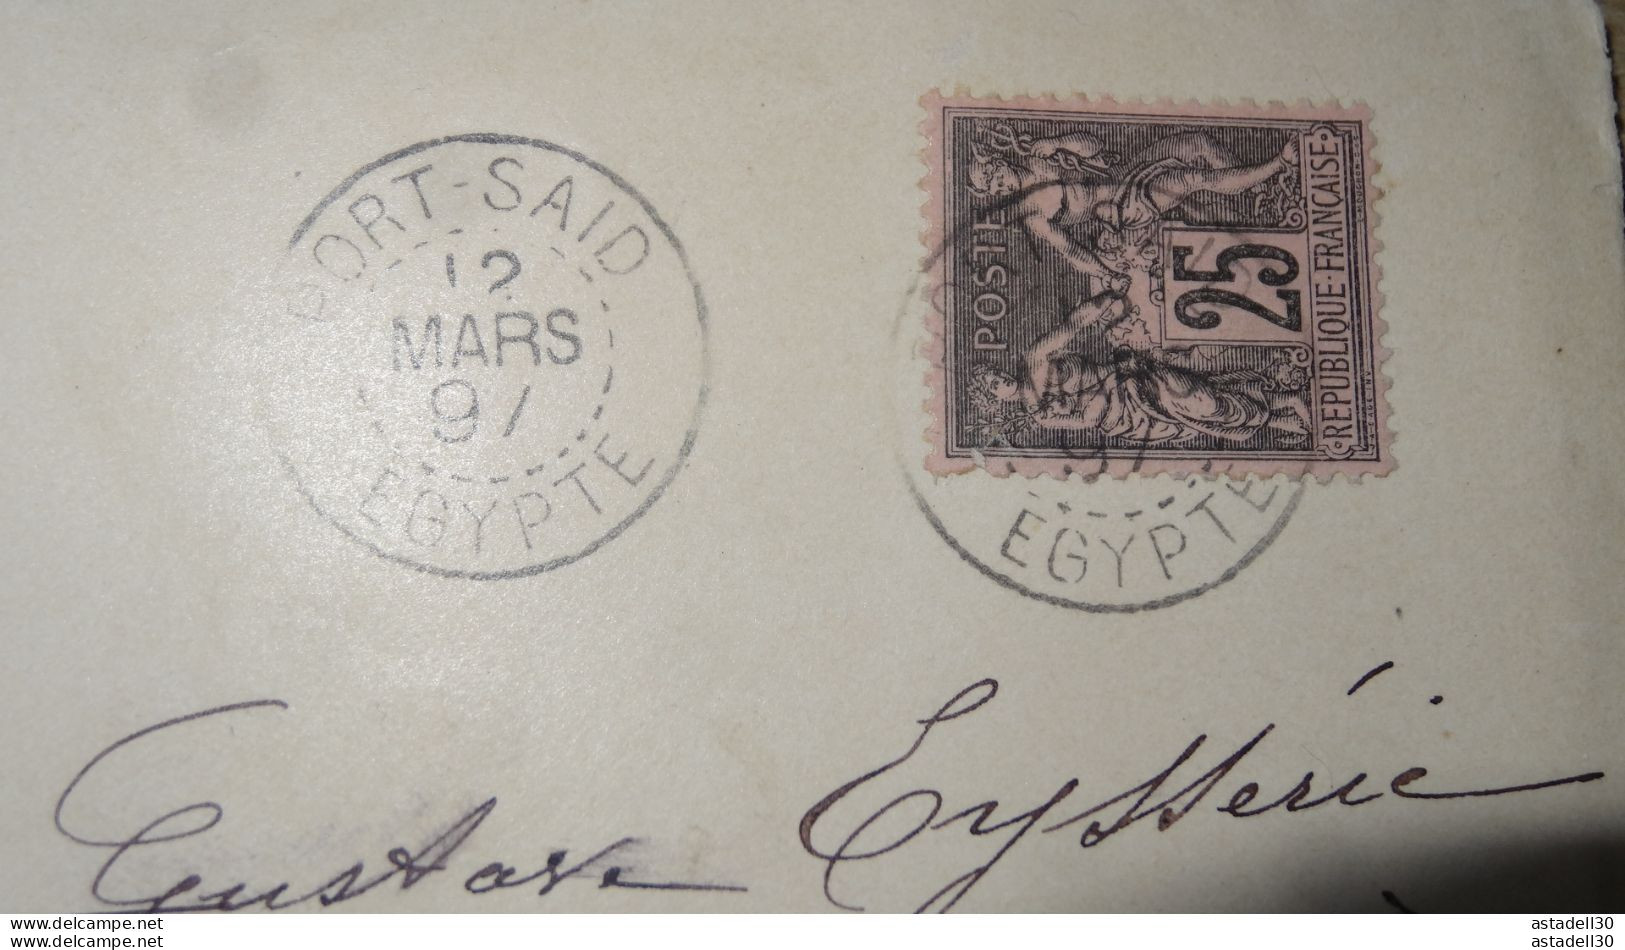 Enveloppe De PORT SAID, Egypte, 1897, 25c Sage .........PHI......... ENV-2025 - Brieven En Documenten